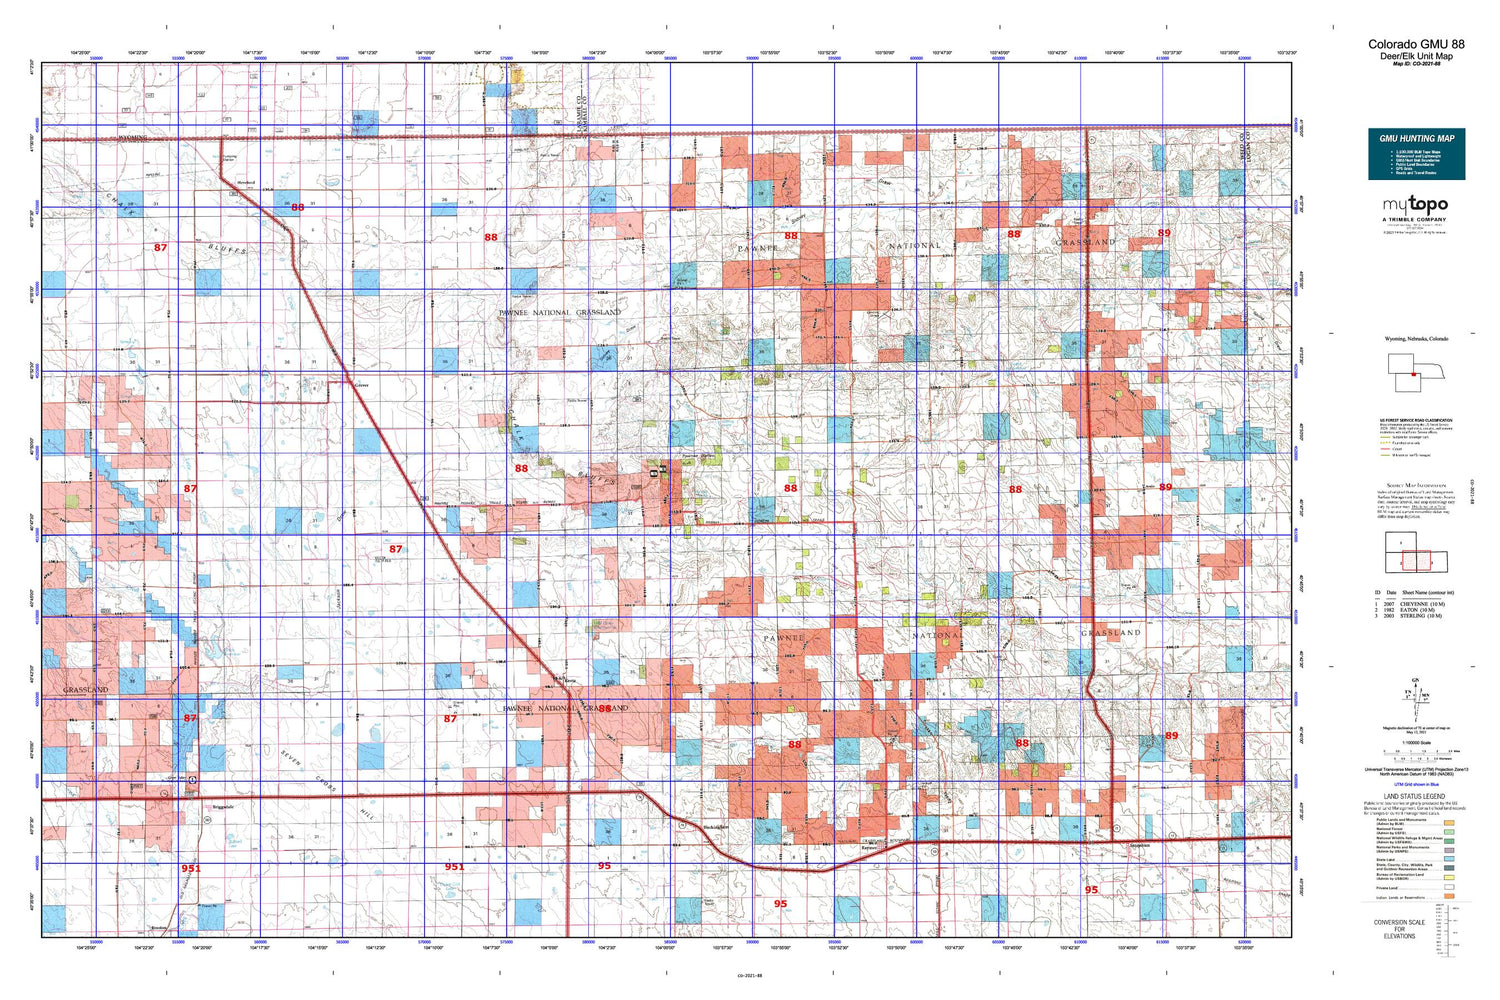 Colorado GMU 88 Map Image